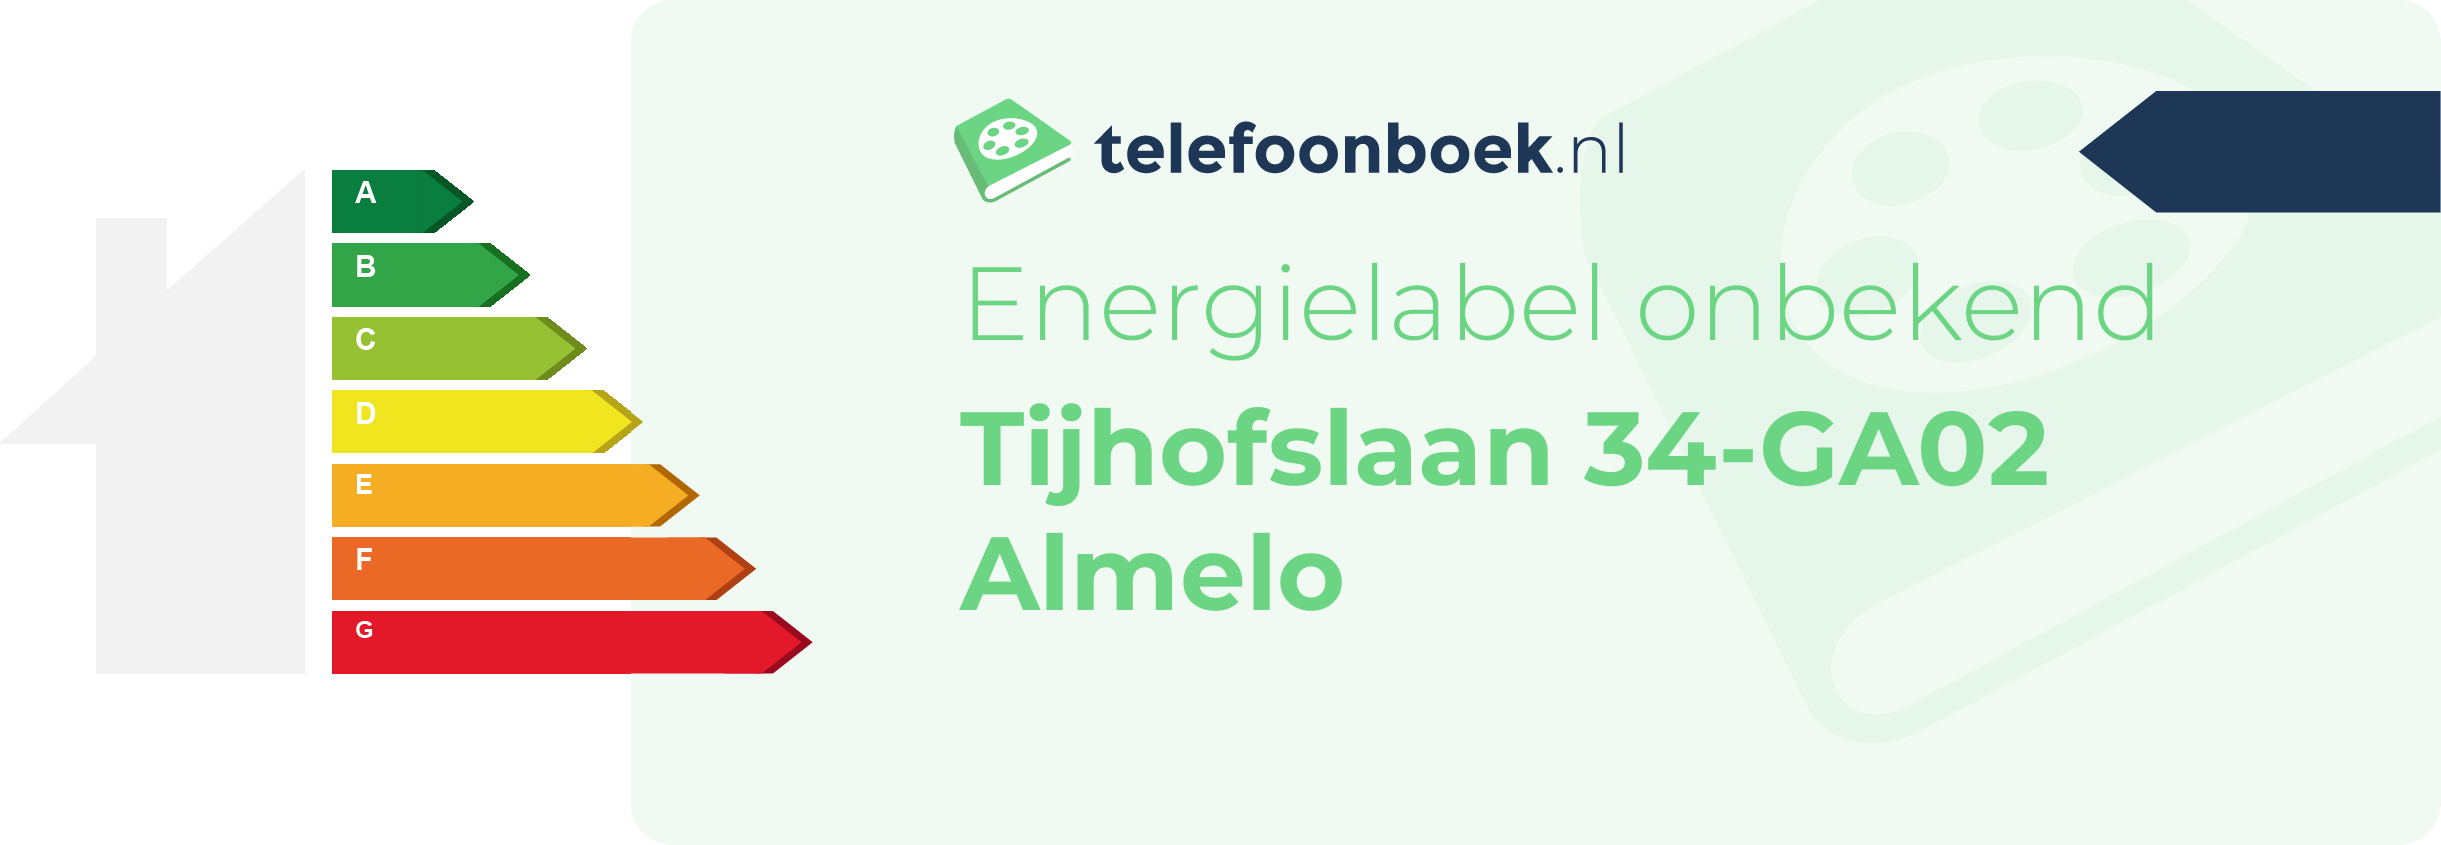 Energielabel Tijhofslaan 34-GA02 Almelo